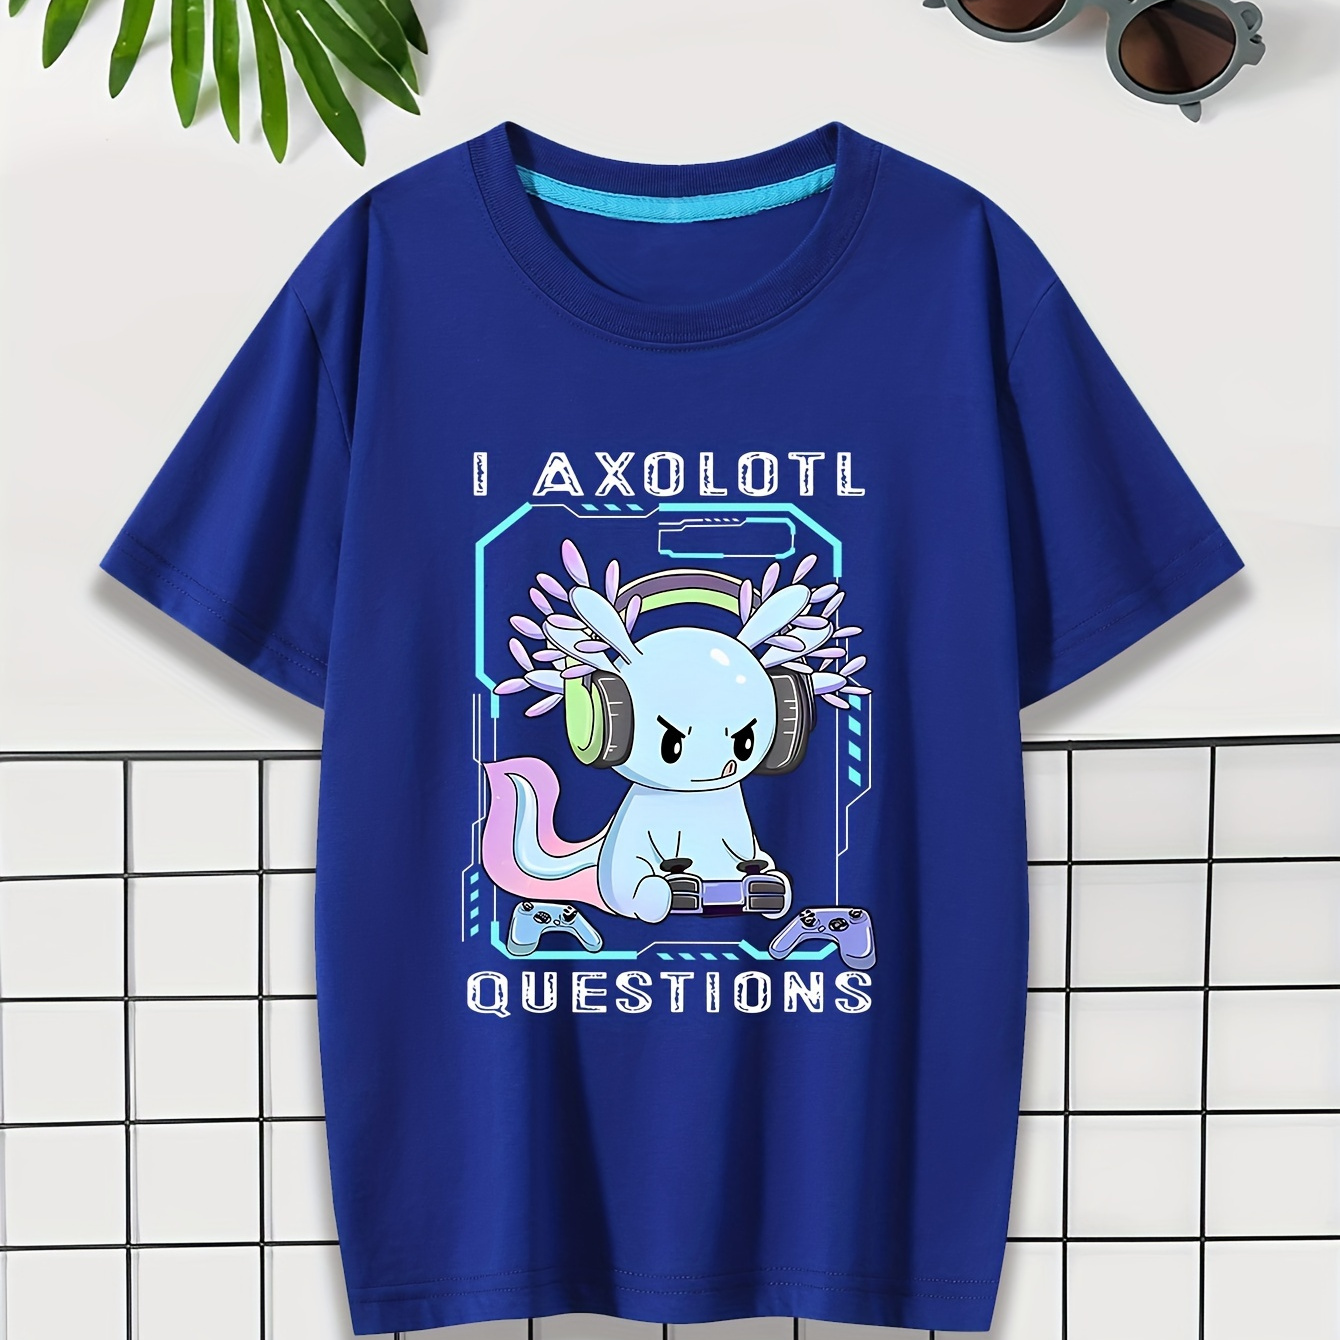 

I Axolotl Question Print Children's Stylish T-shirt, Boys Summer Sports Lightweight Comfy Round Neck Short Sleeve Casual Top